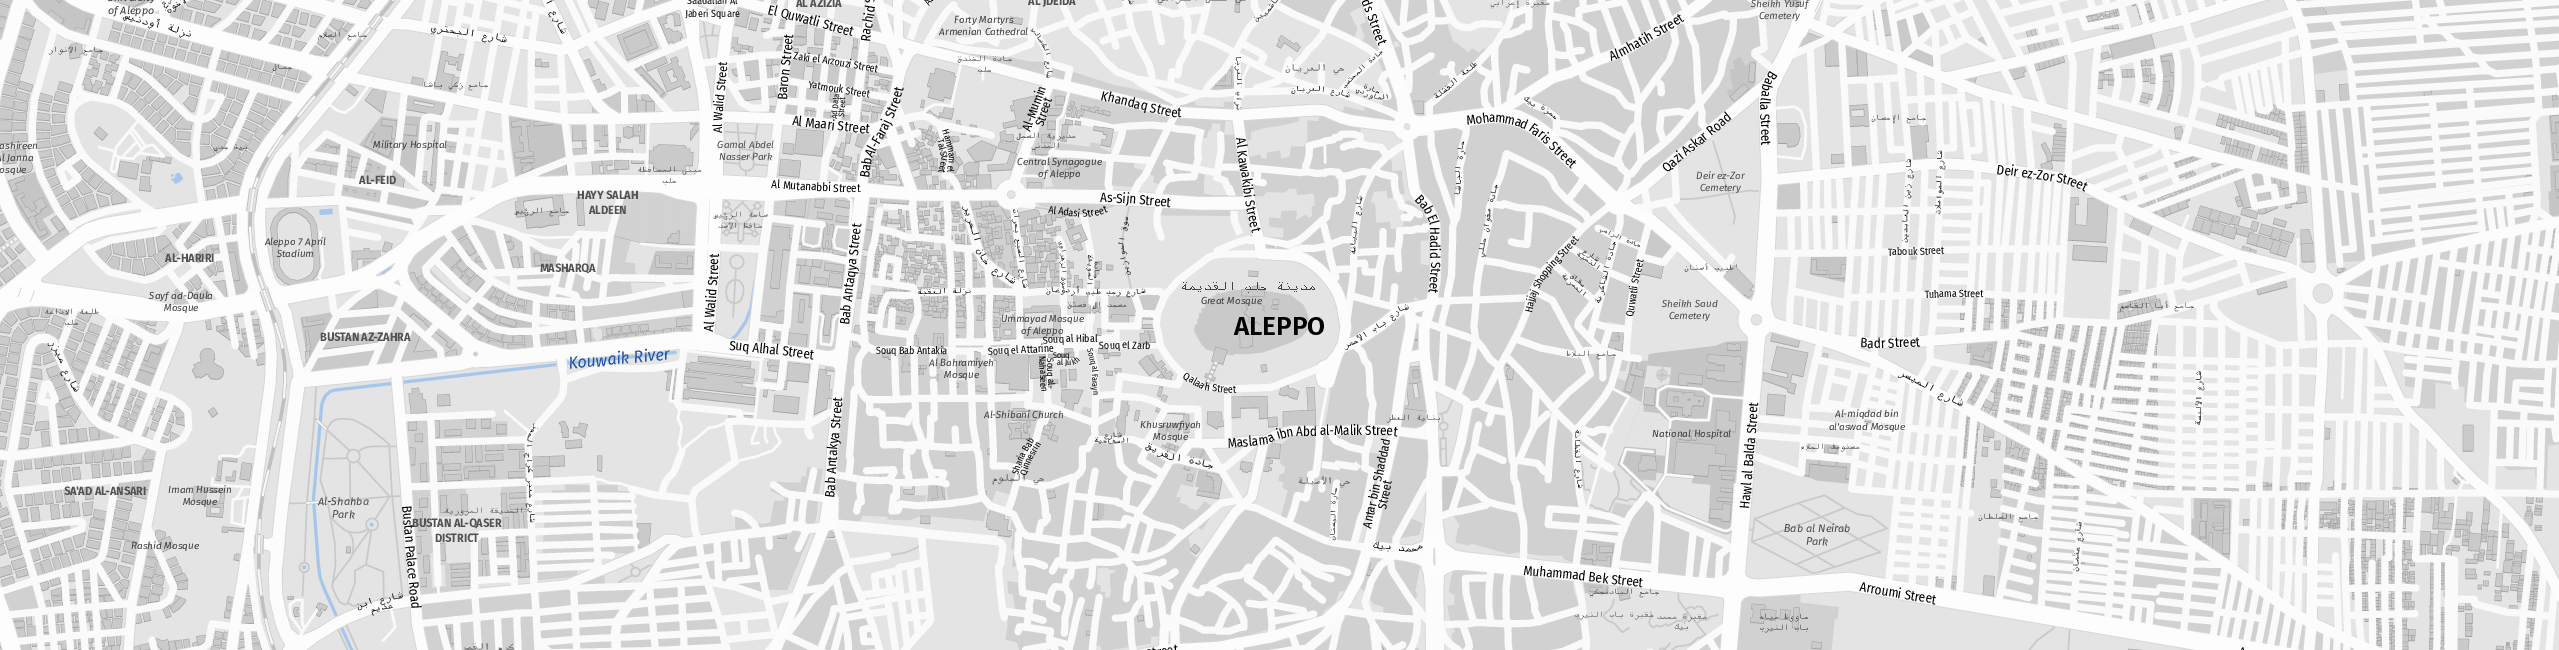 Stadtplan Aleppo zum Downloaden.